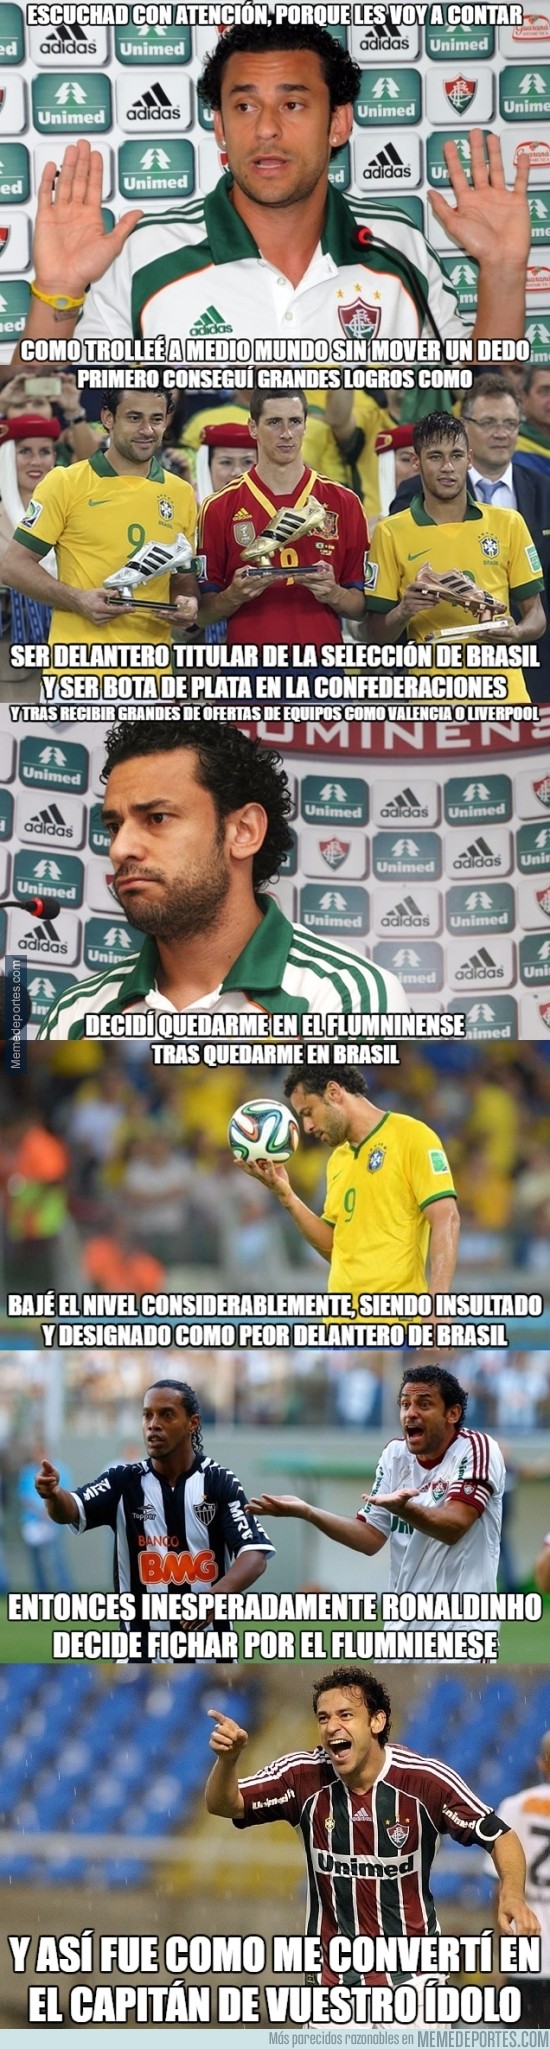 625013 - Fred trolleando a medio mundo gracias al fichaje de Ronaldinho